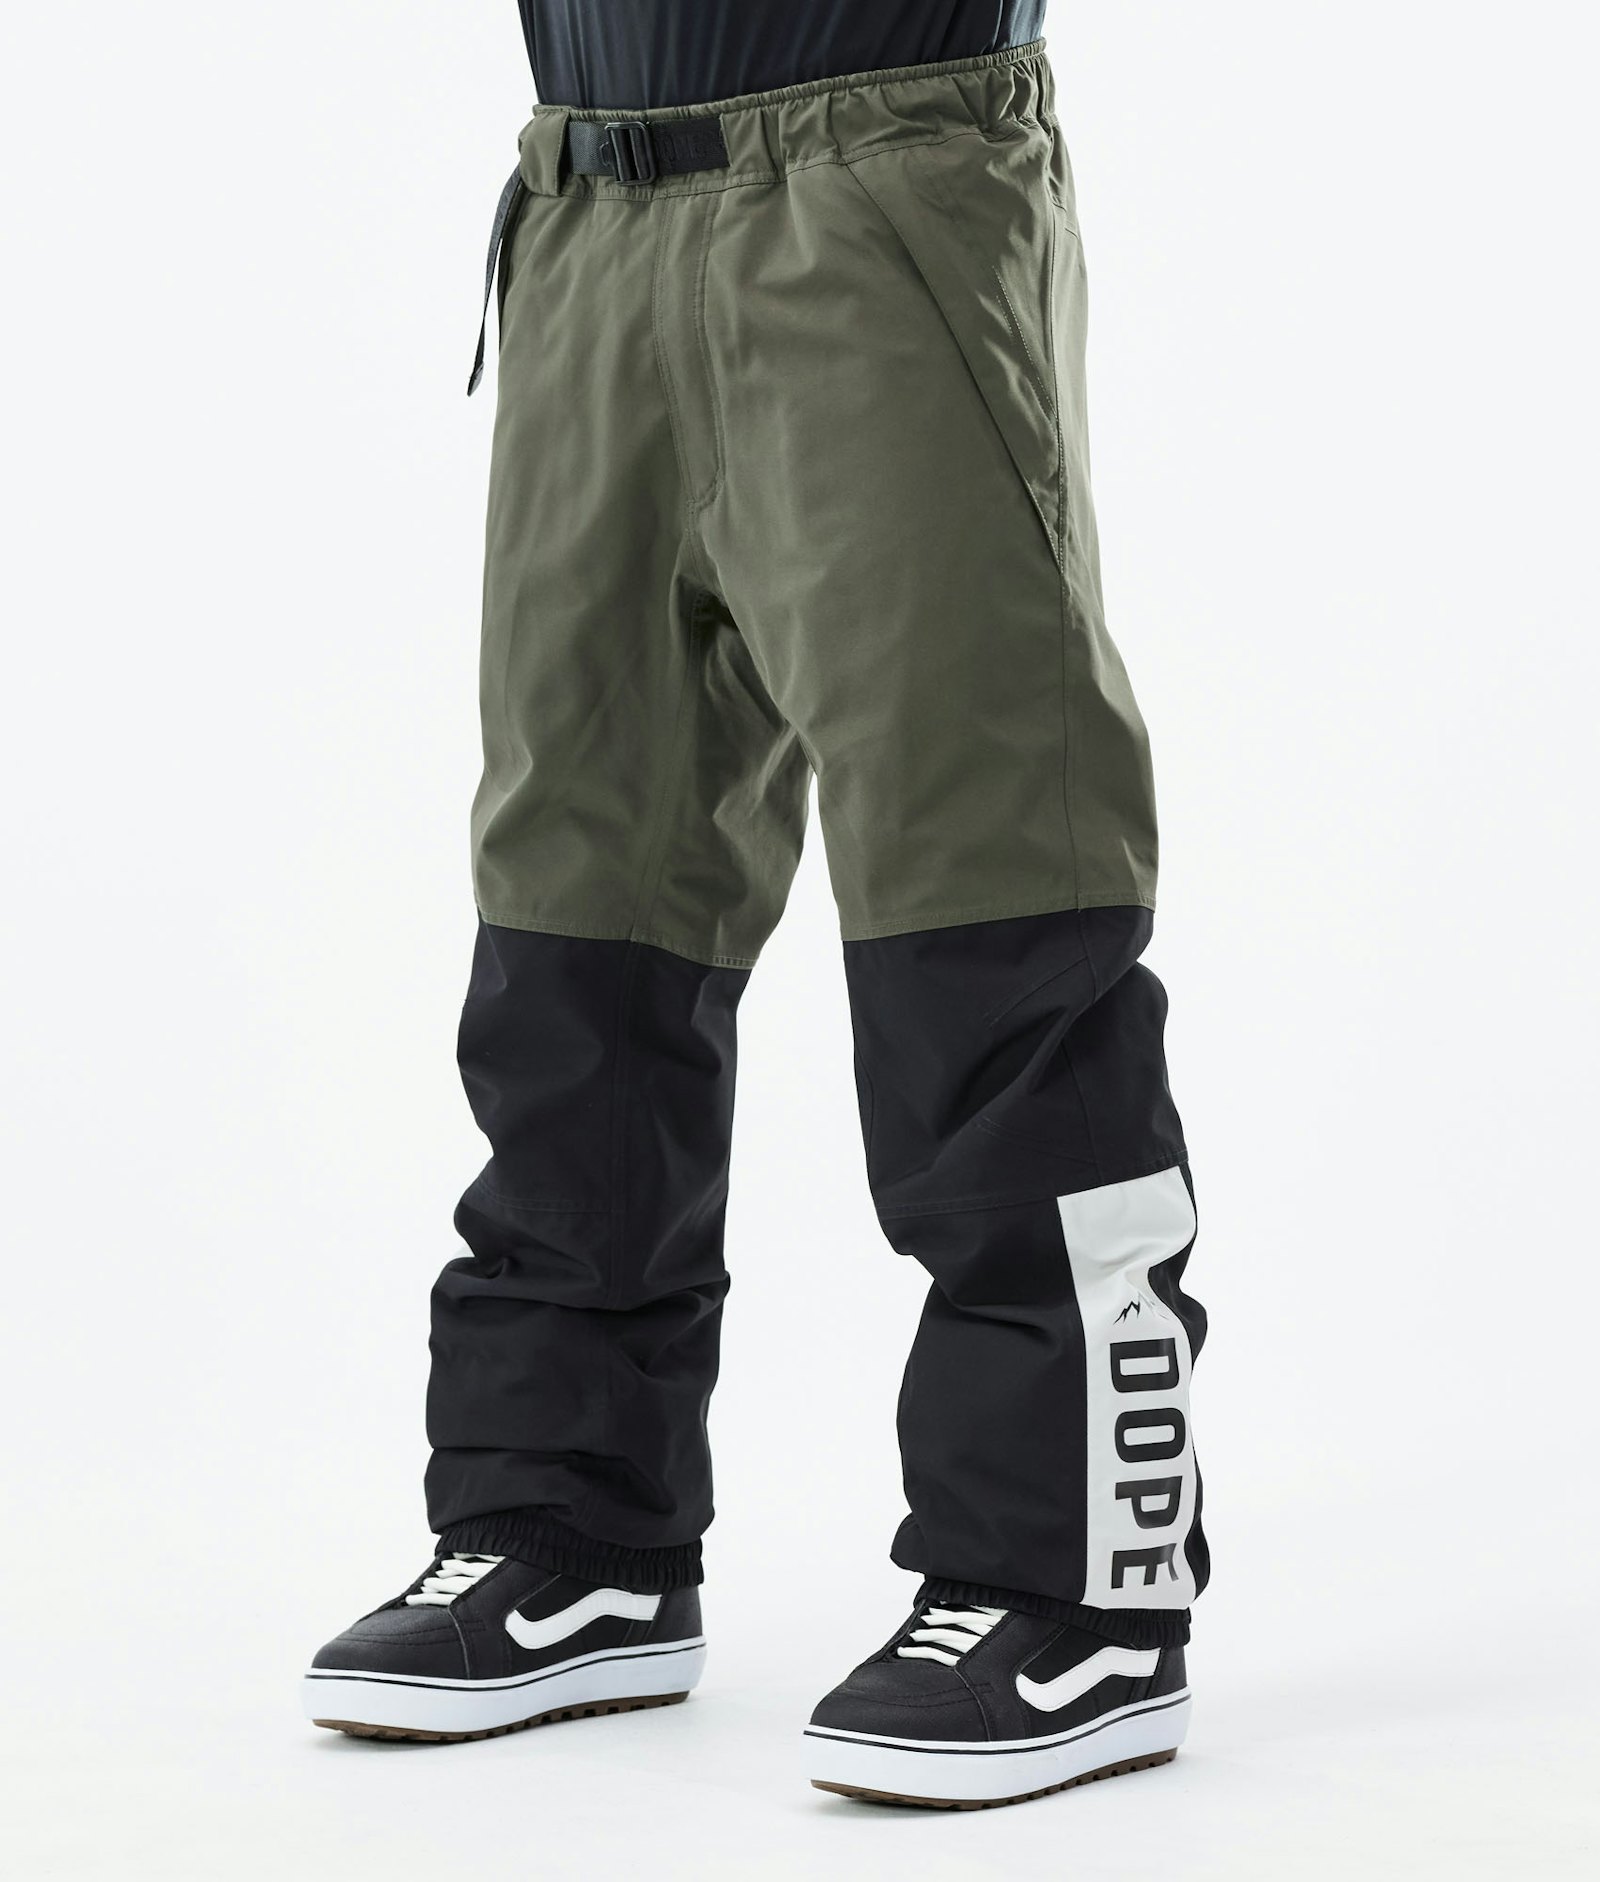 Dope Blizzard LE Pantalon de Snowboard Homme Limited Edition Multicolor Olive Green